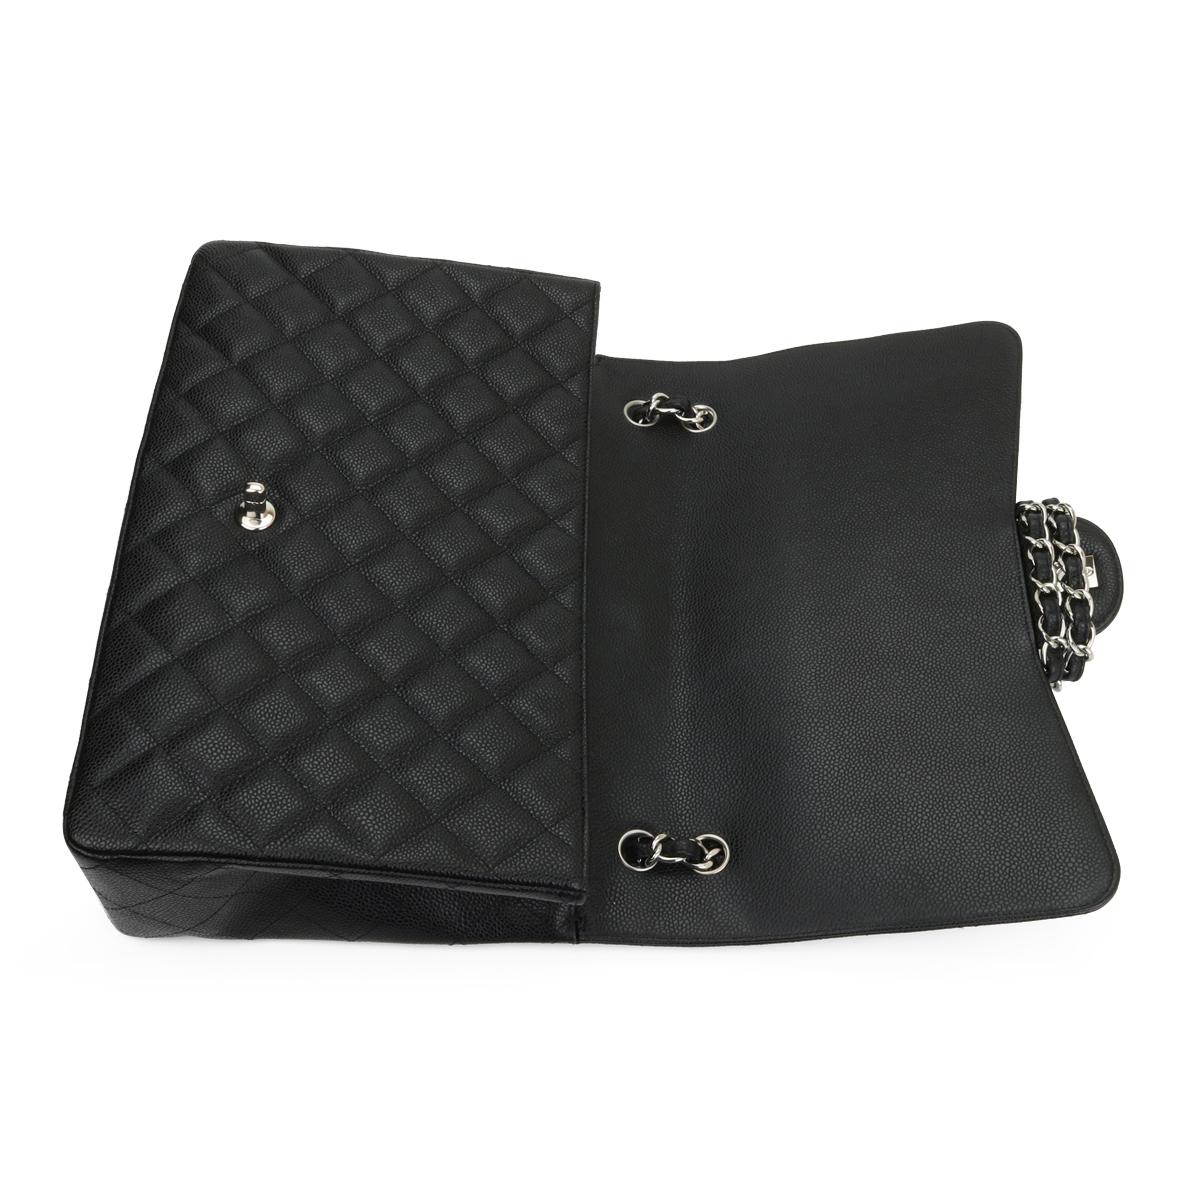 CHANEL Single Flap Maxi Bag Black Caviar with Silver Hardware 2010 6